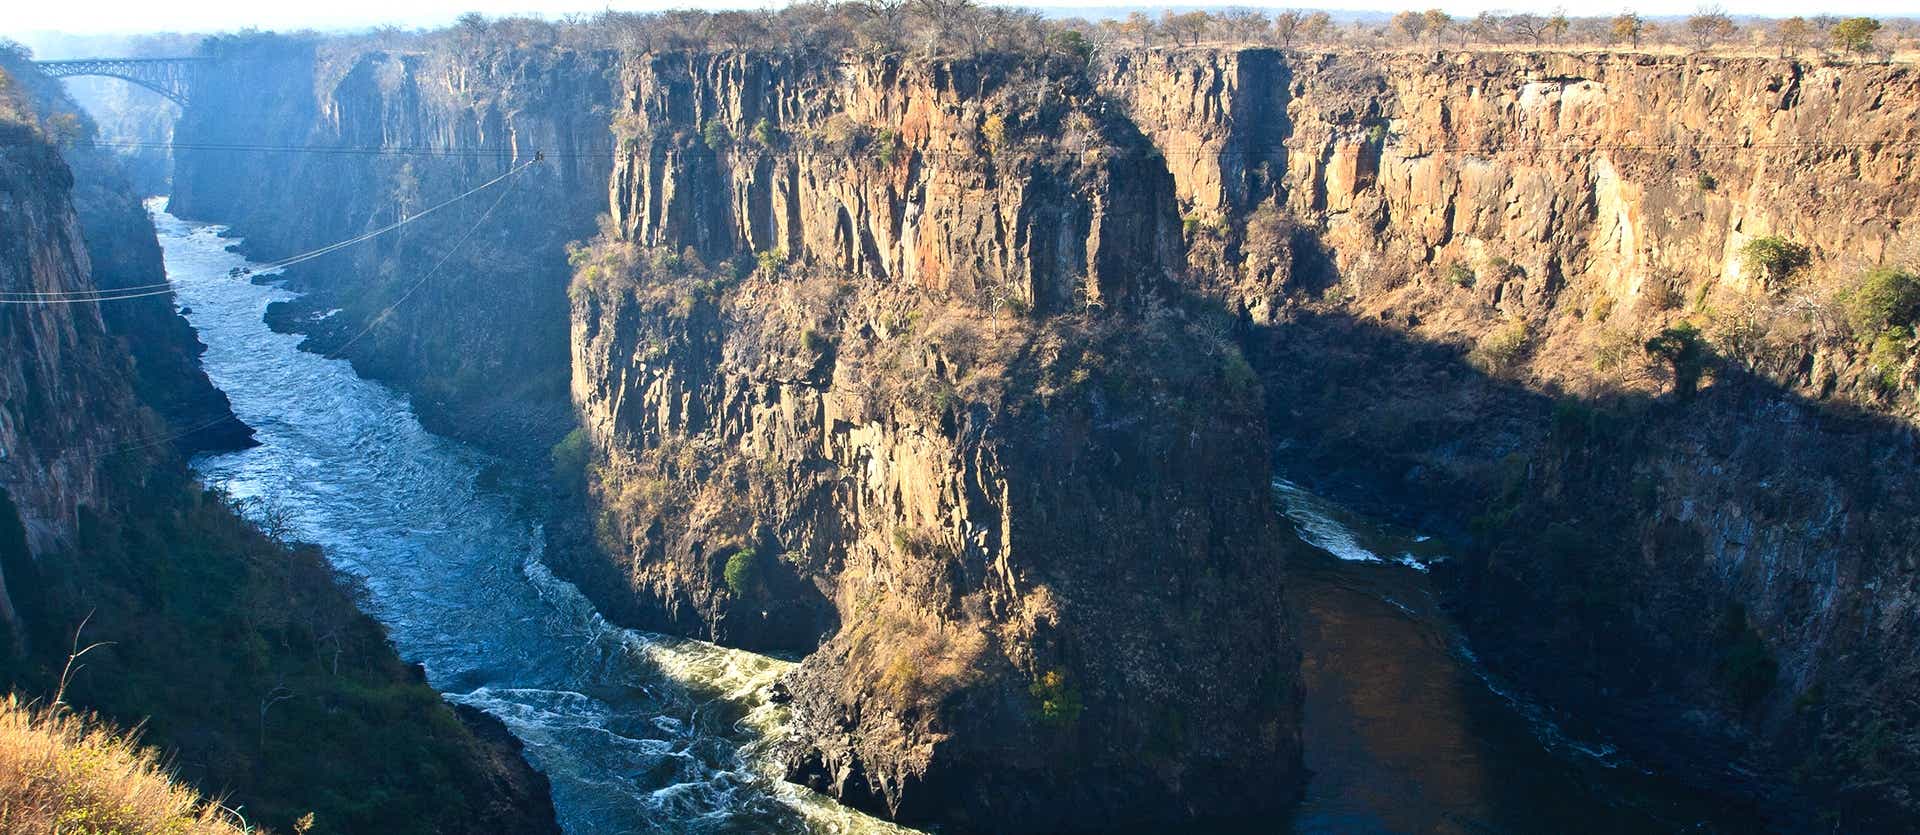 Zambezi River <span class="iconos separador"></span> Zimbabwe 